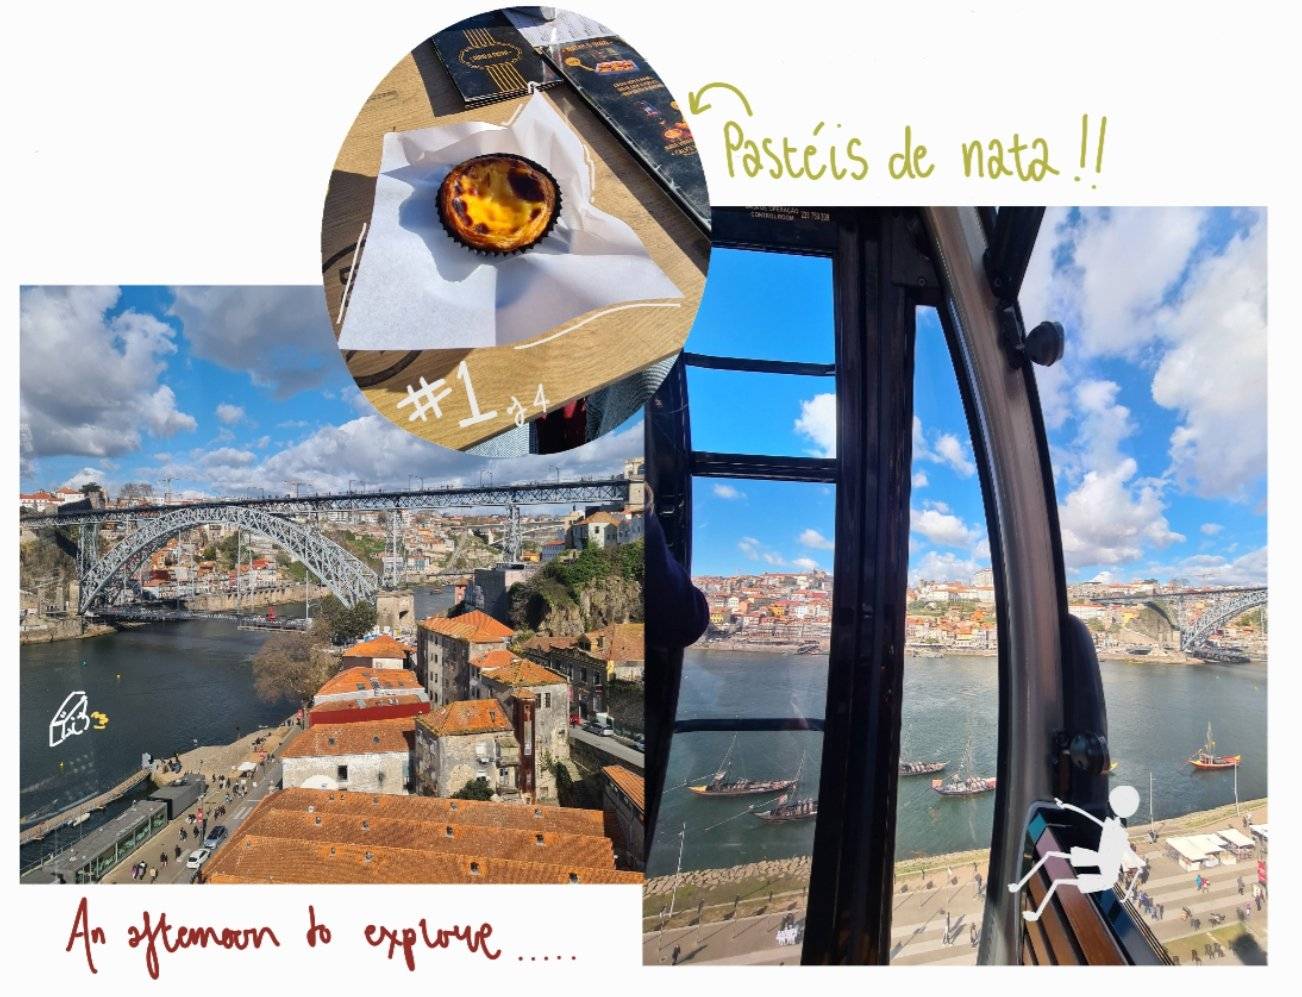 composite image showing pasteis de nata (custard tart), river view of city and large bridge spanning river